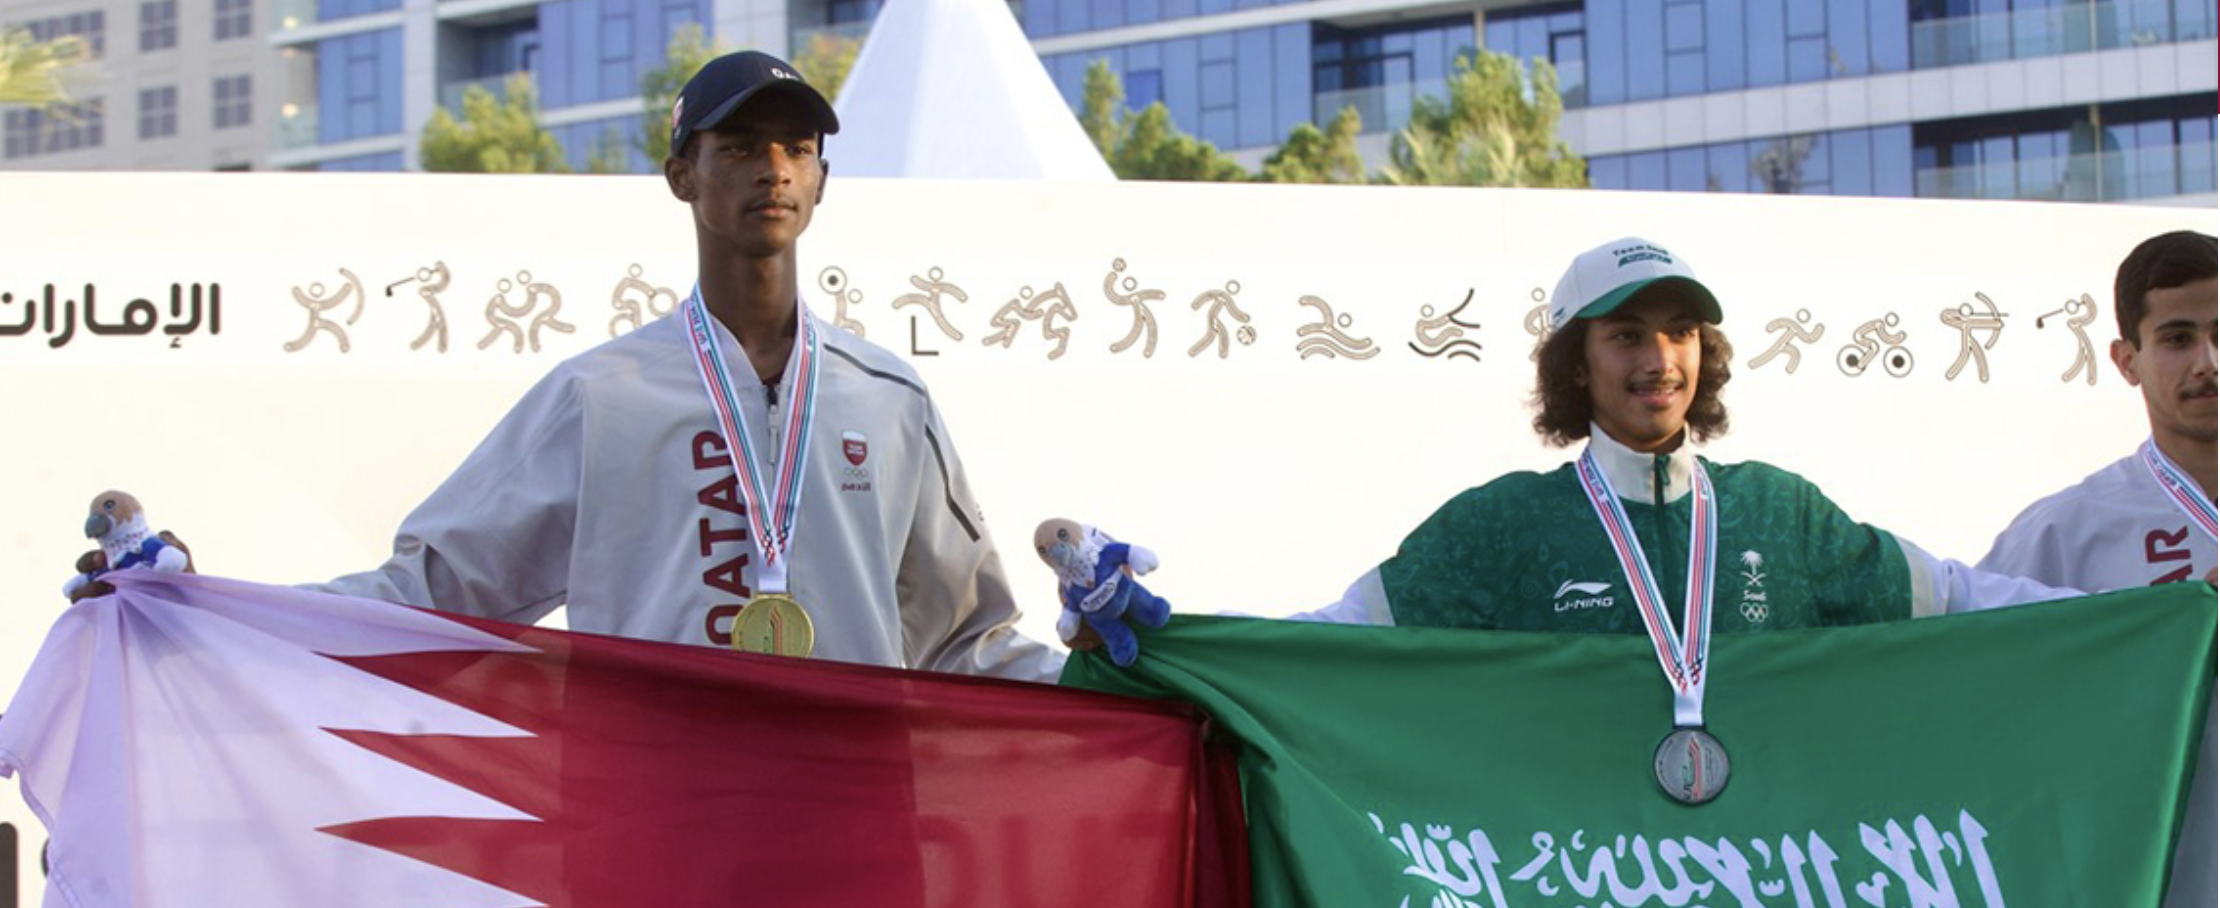 Qatar’s athletes shine at GCC Youth Games